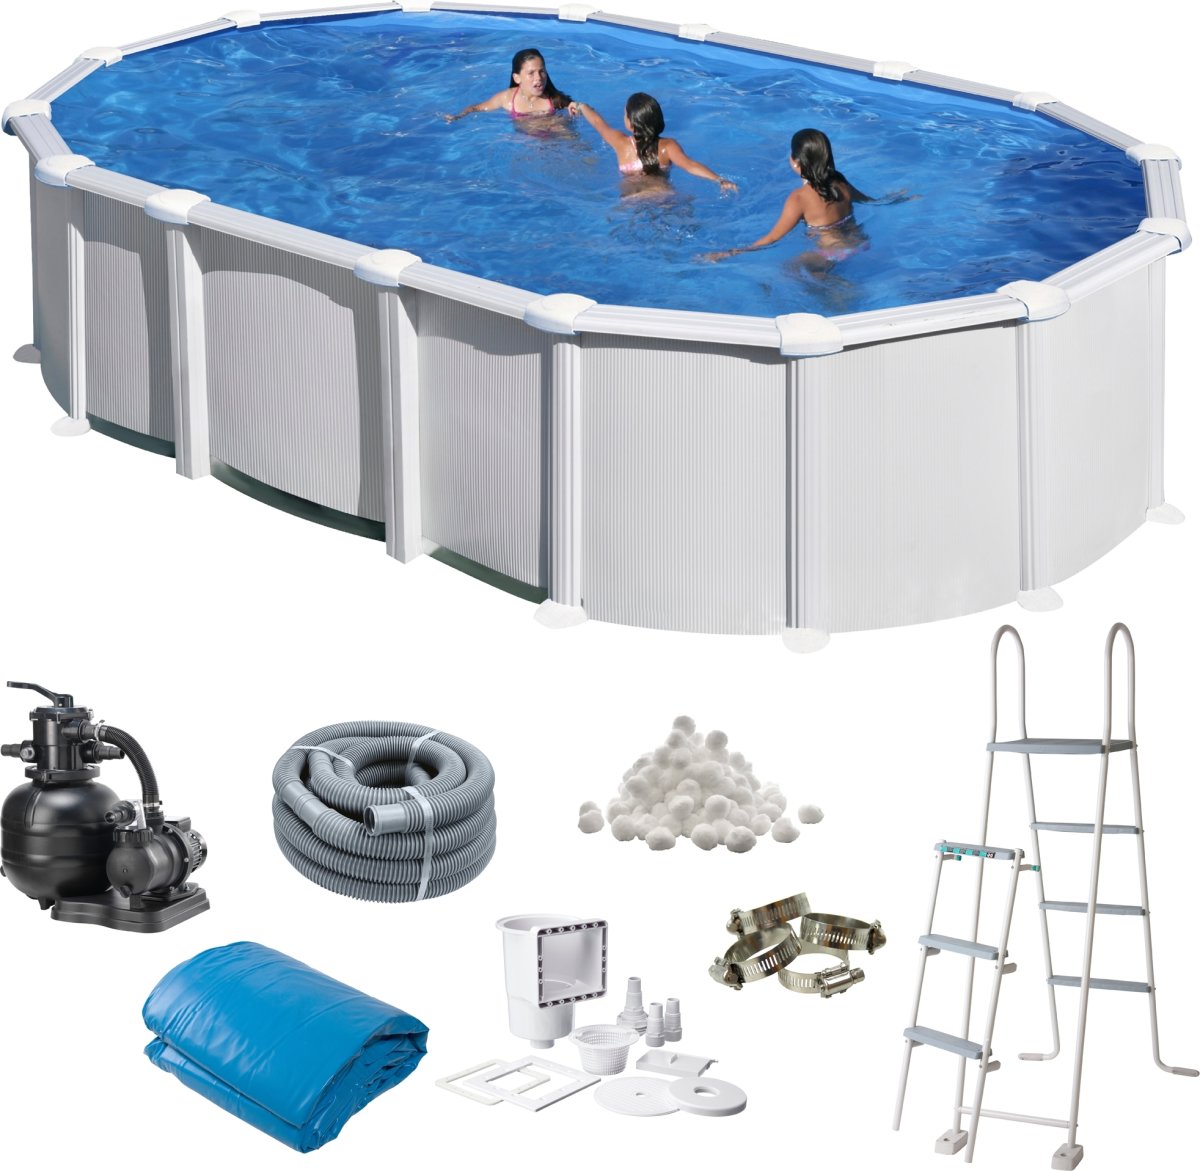 Pool Basic 7,3x3,75x1,32 m | 28 217 liter | Vit